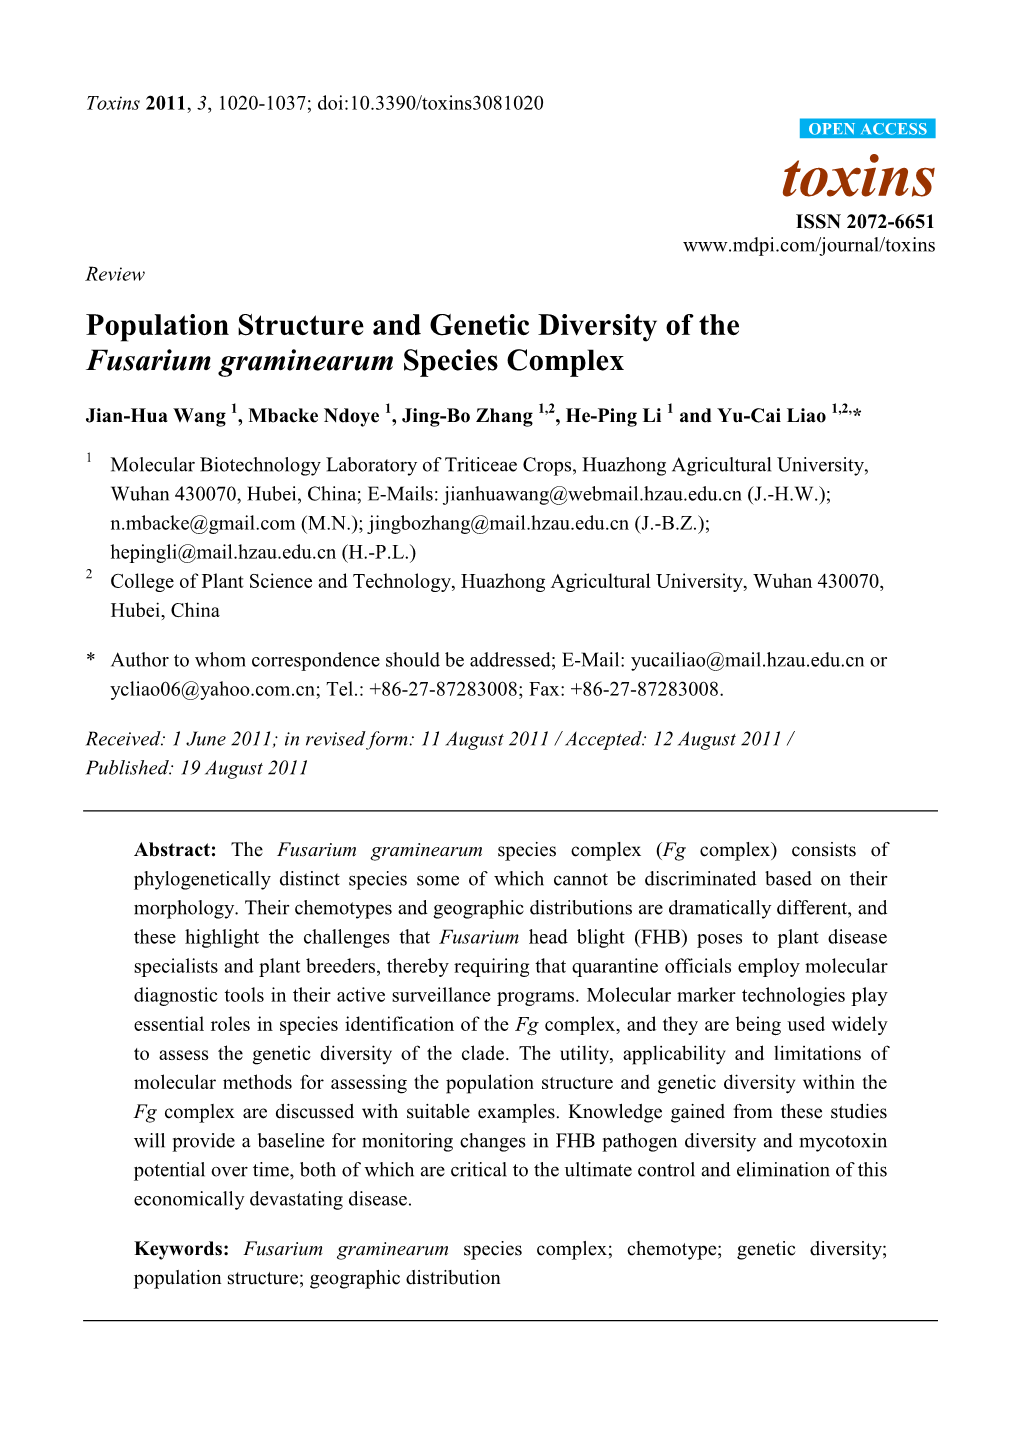 Population Structure and Genetic Diversity of the Fusarium Graminearum Species Complex